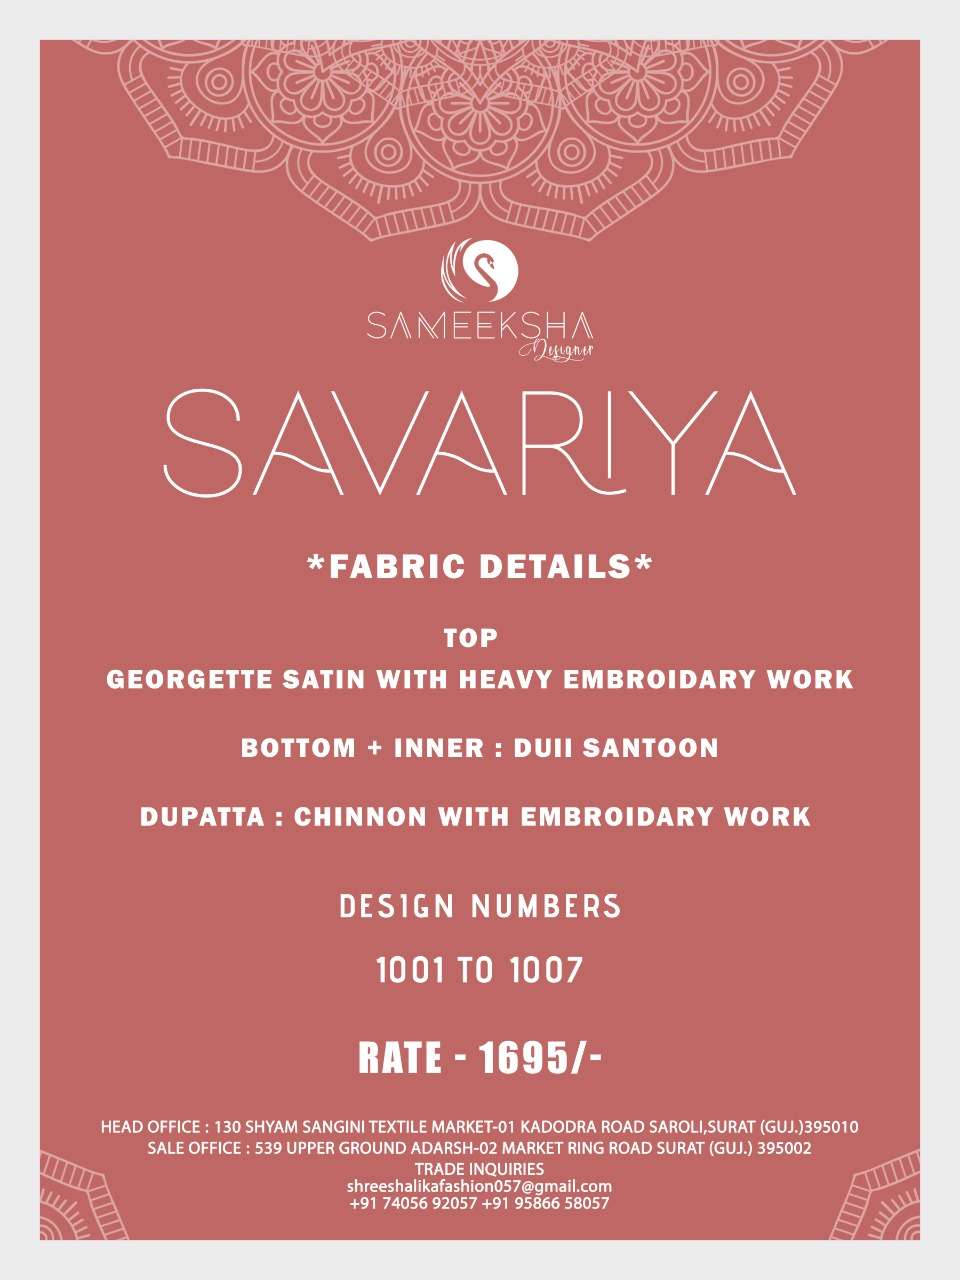 SAVARIYA BY SAMMEKSHA DESIGNER 1001 TO 1007 SERIES BEAUTIFUL STYLISH SHARARA SUITS FANCY COLORFUL CASUAL WEAR & ETHNIC WEAR & READY TO WEAR GEORGETTE SATIN DRESSES AT WHOLESALE PRICE